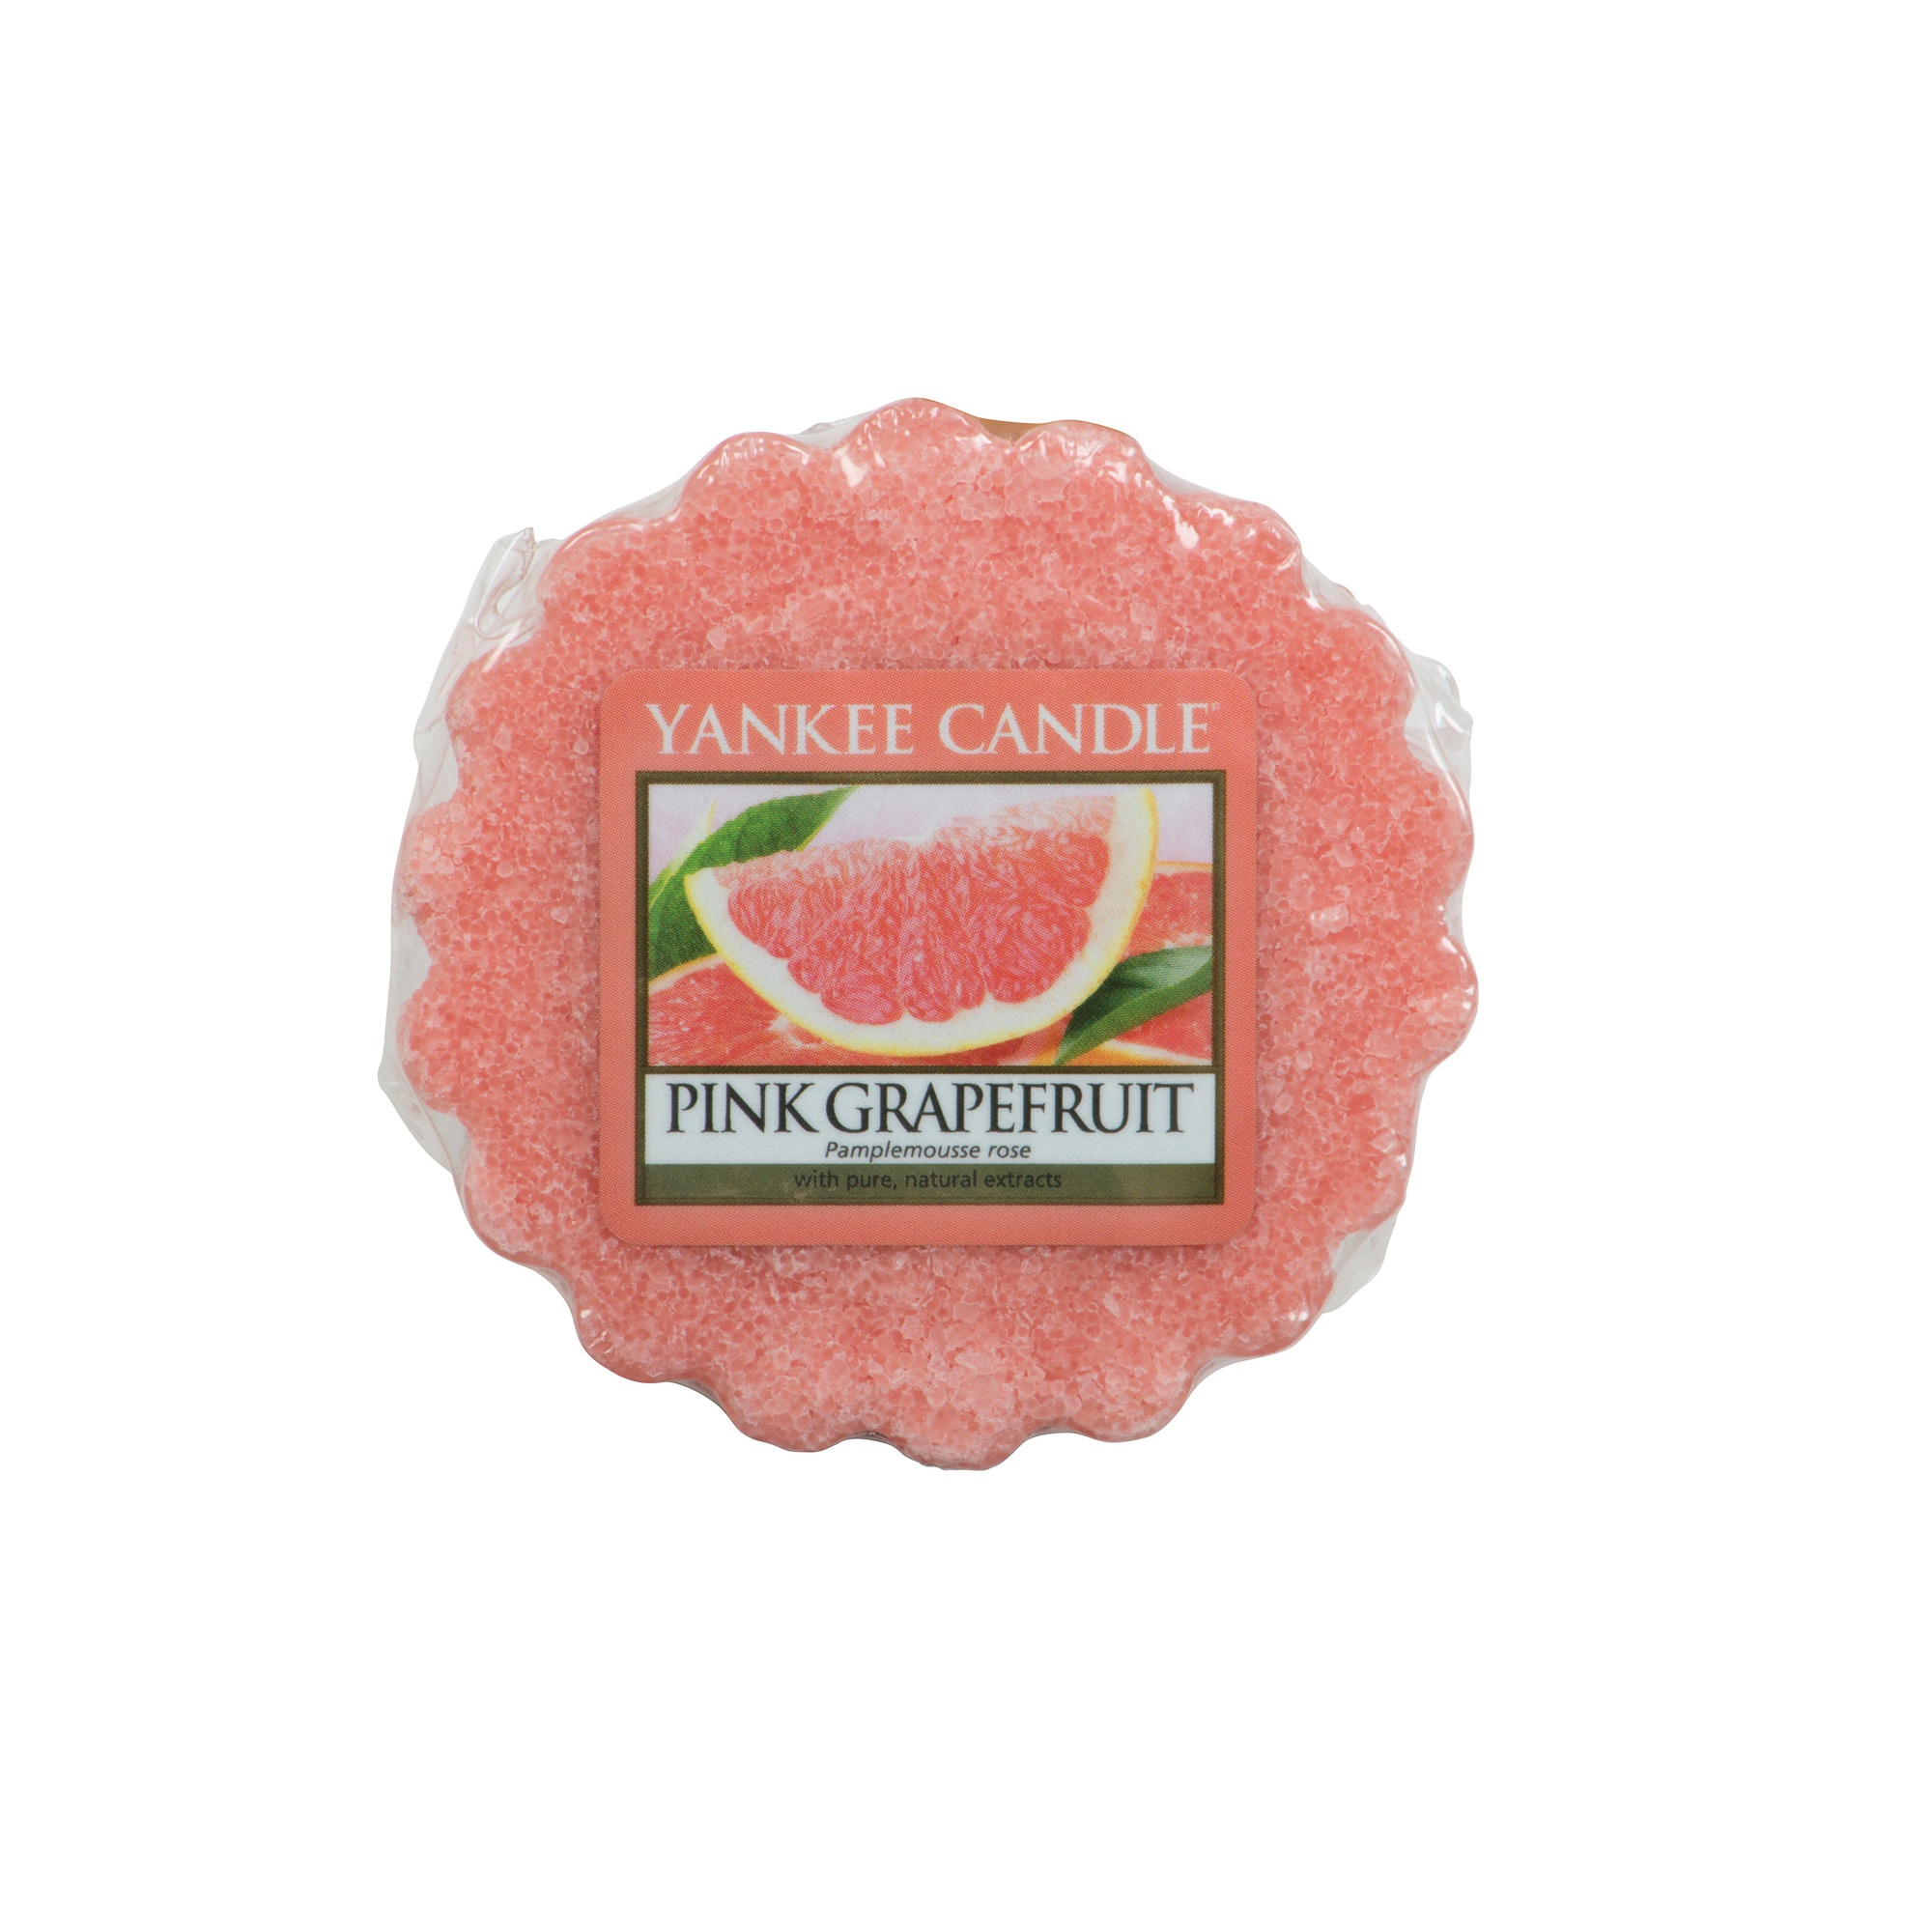 Ароматическая свеча-тарталетка Yankee candle Розовый грейпфрут 22 г ароматическая свеча тарталетка yankee candle розовый грейпфрут 22 г